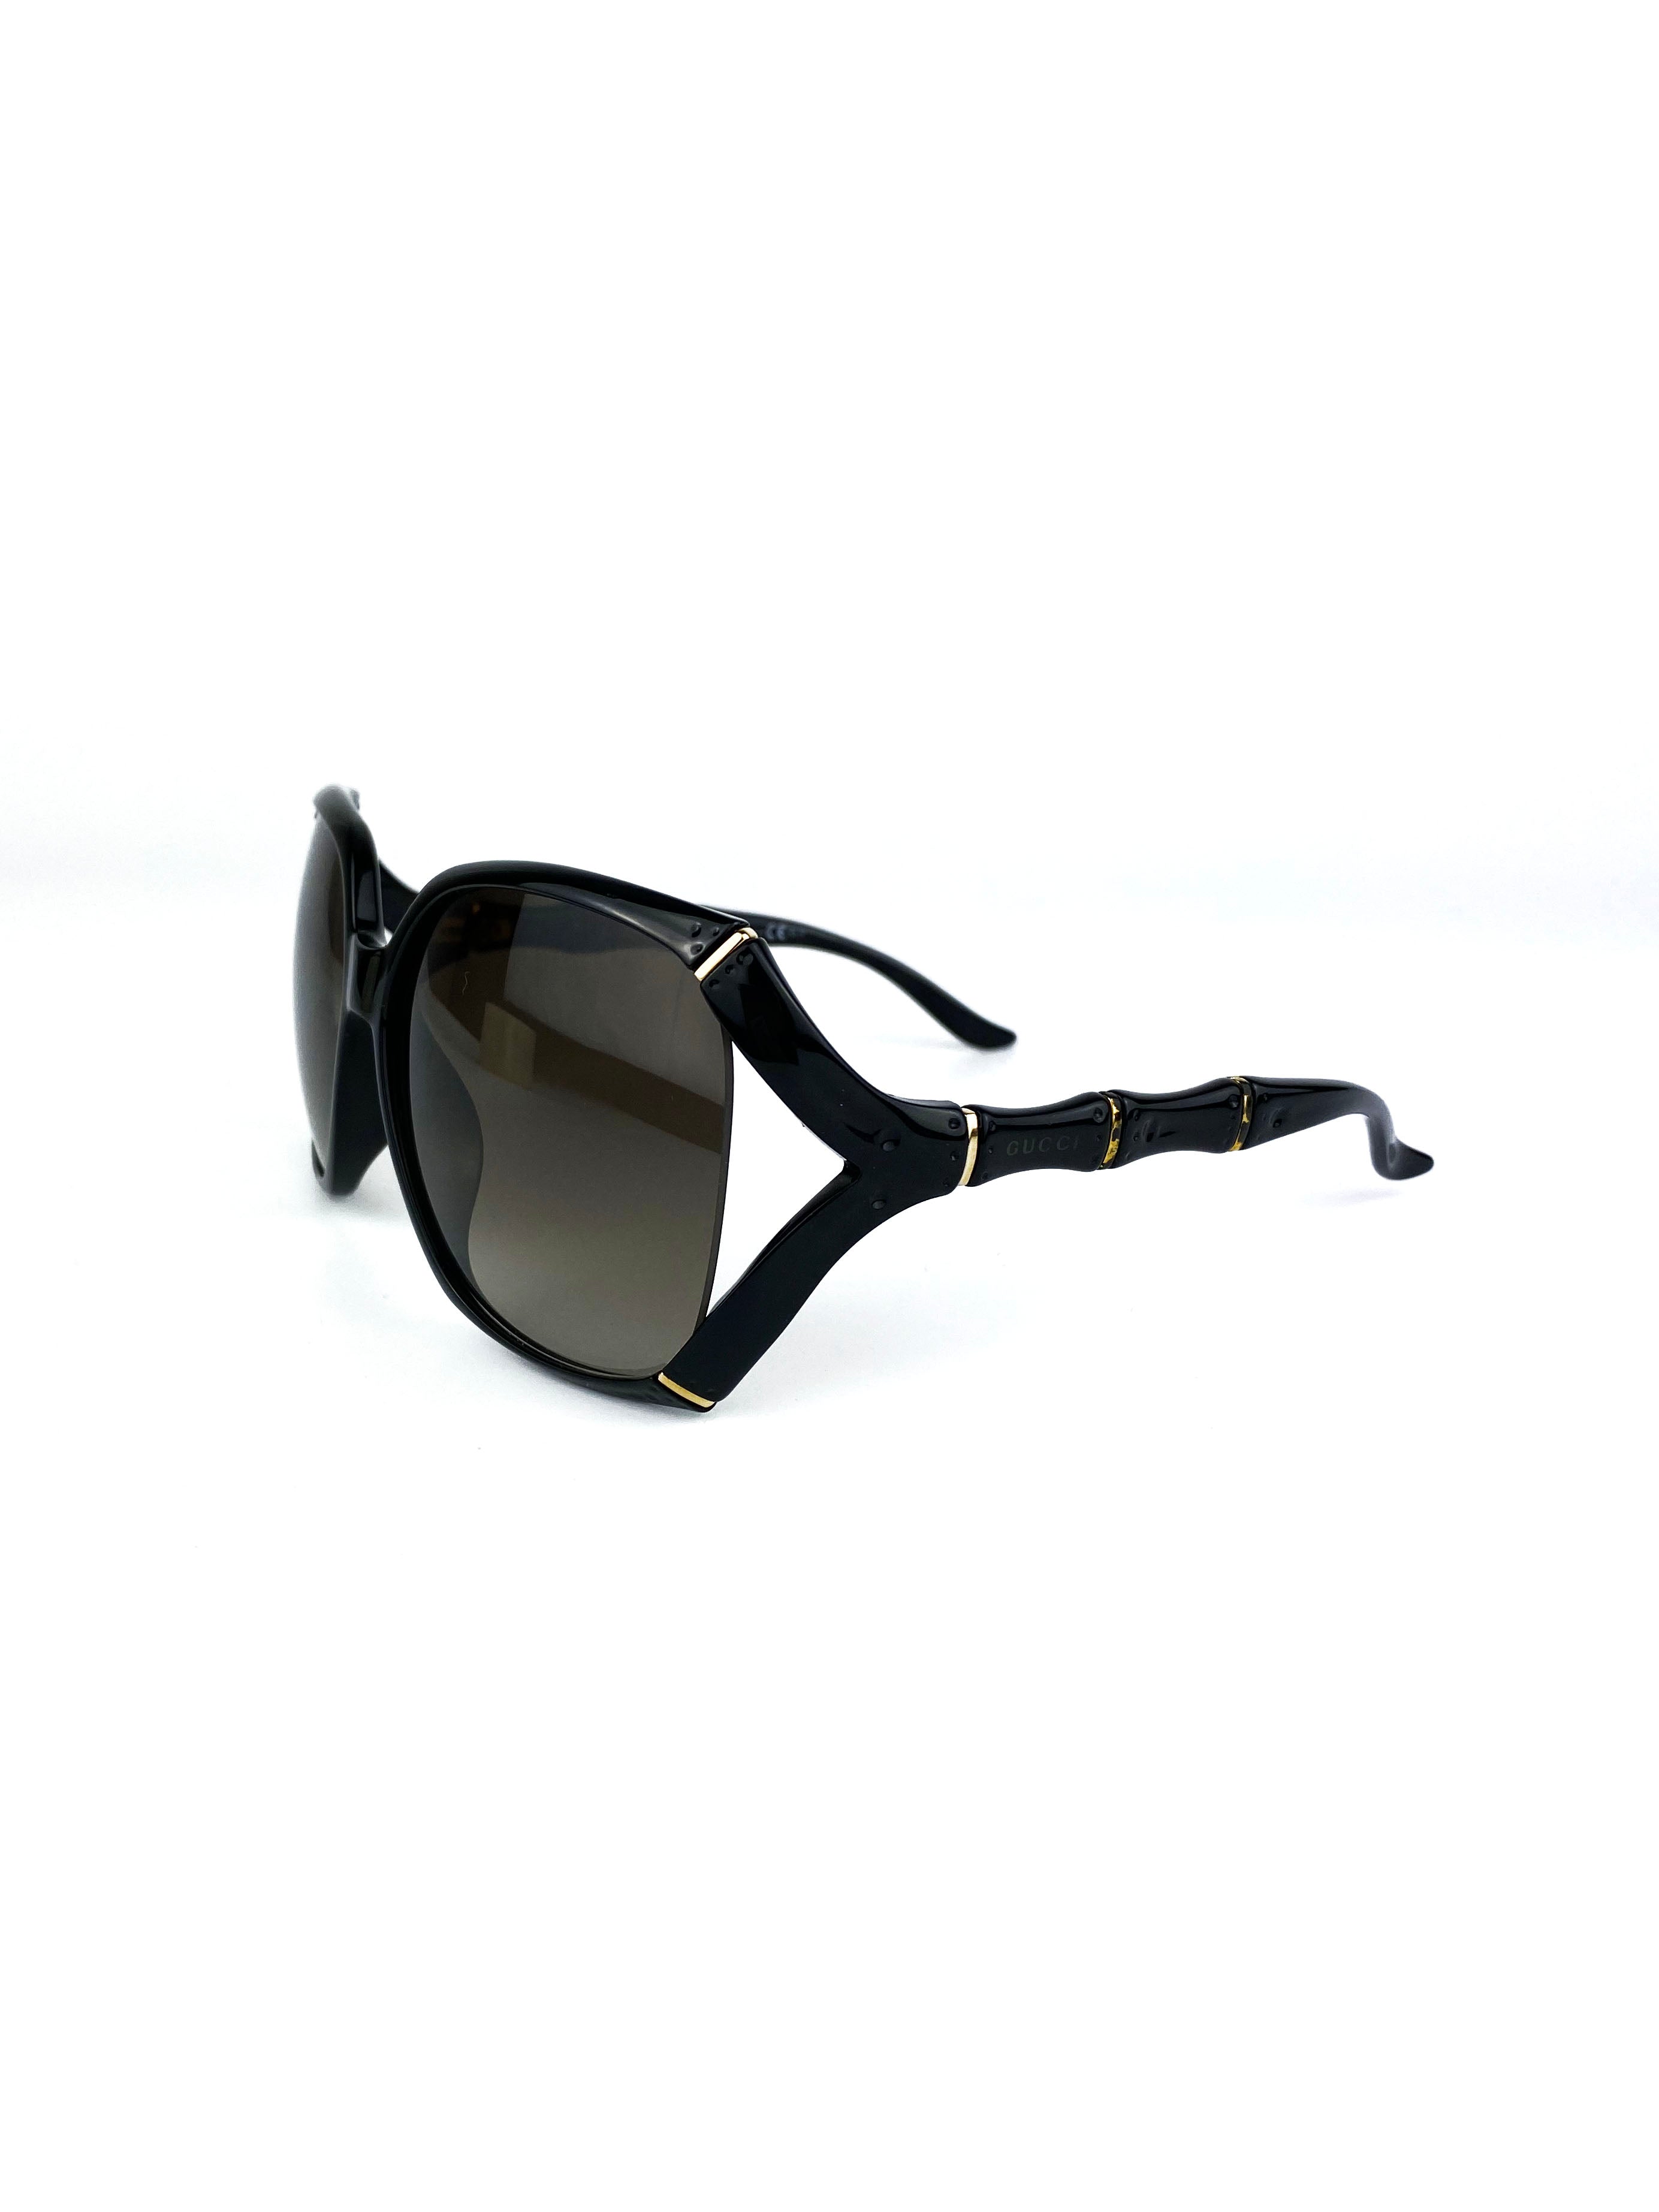 Gucci Black Bamboo Effect Oversized Sunglasses